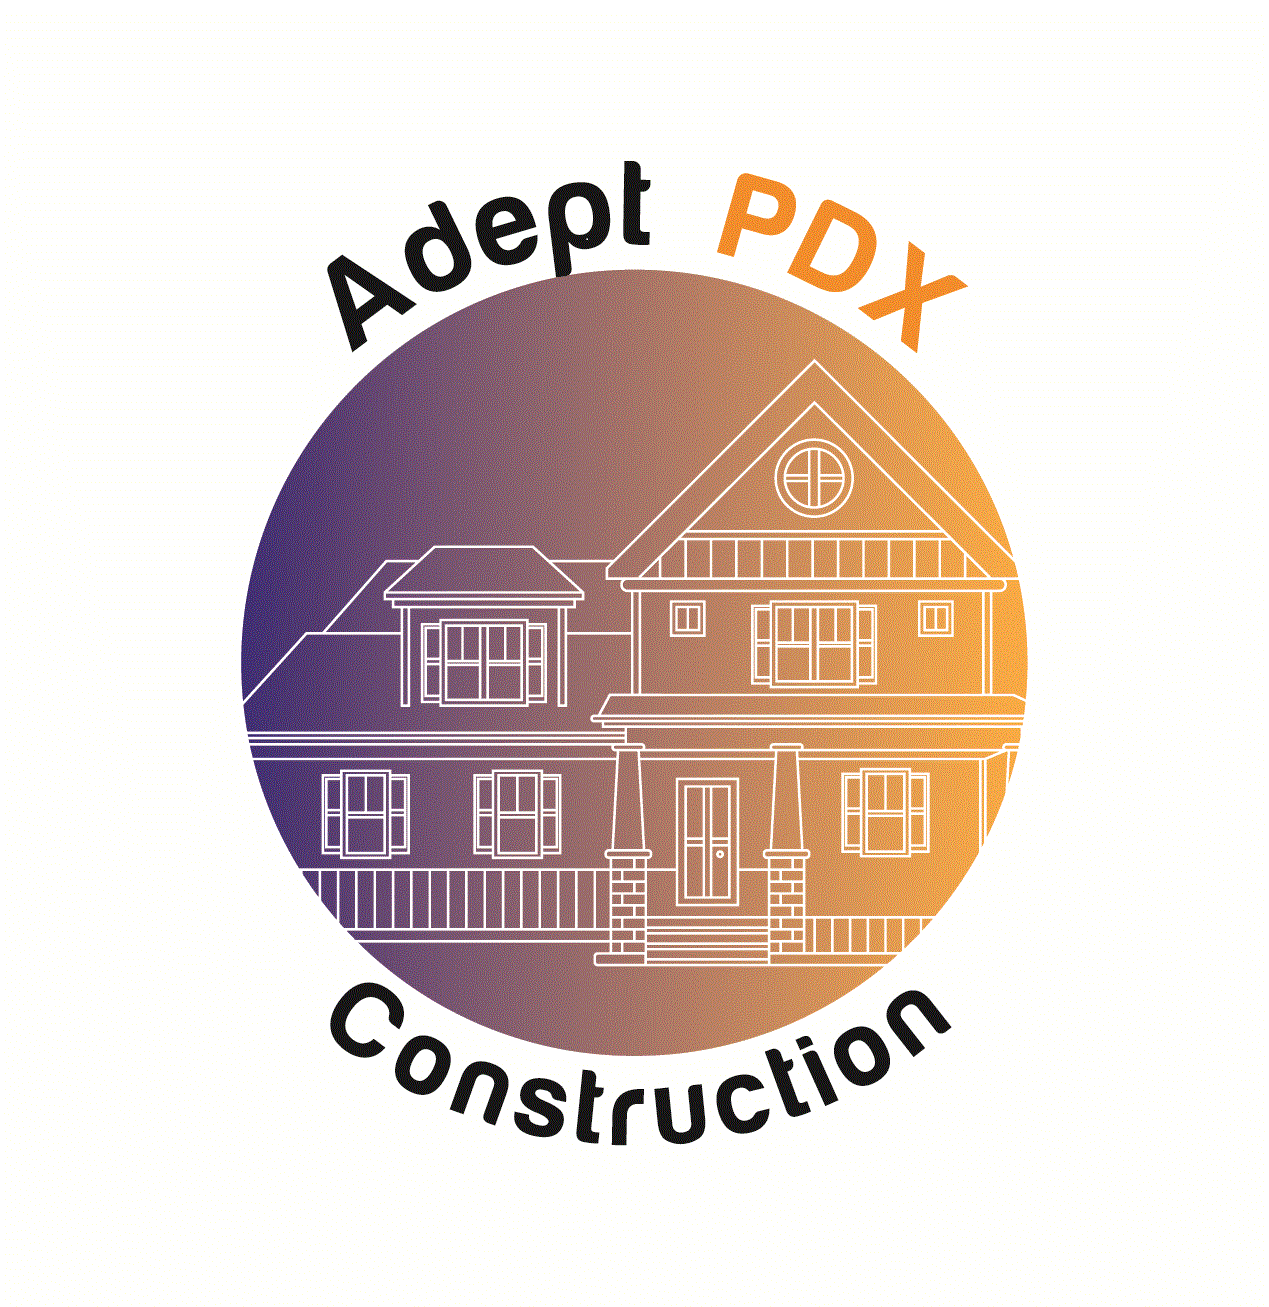 Adept_pdx_logo